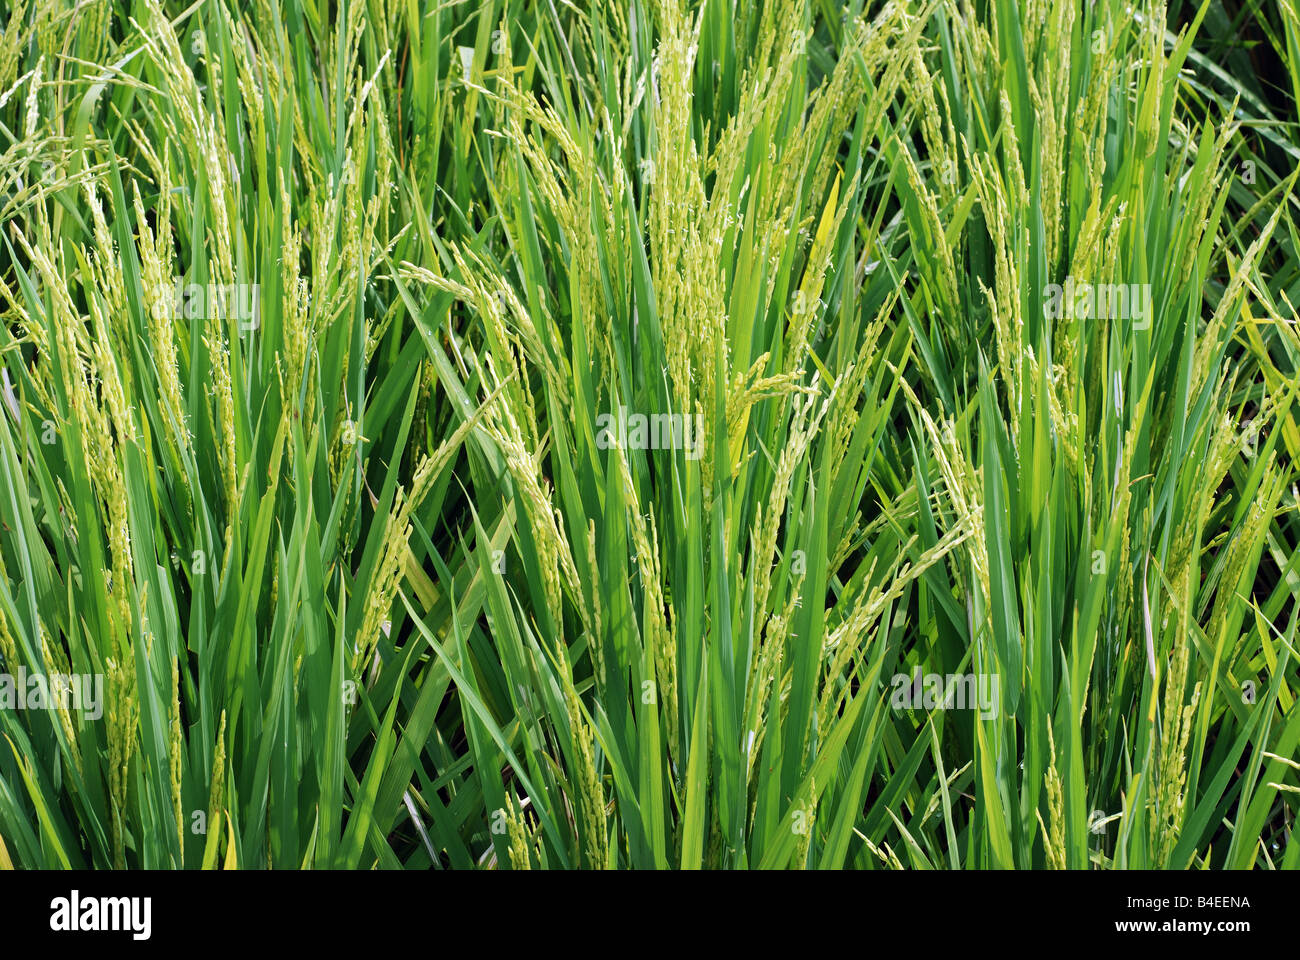 Stock Photo Rice Grains On Paddy Plants Closeup 19987894